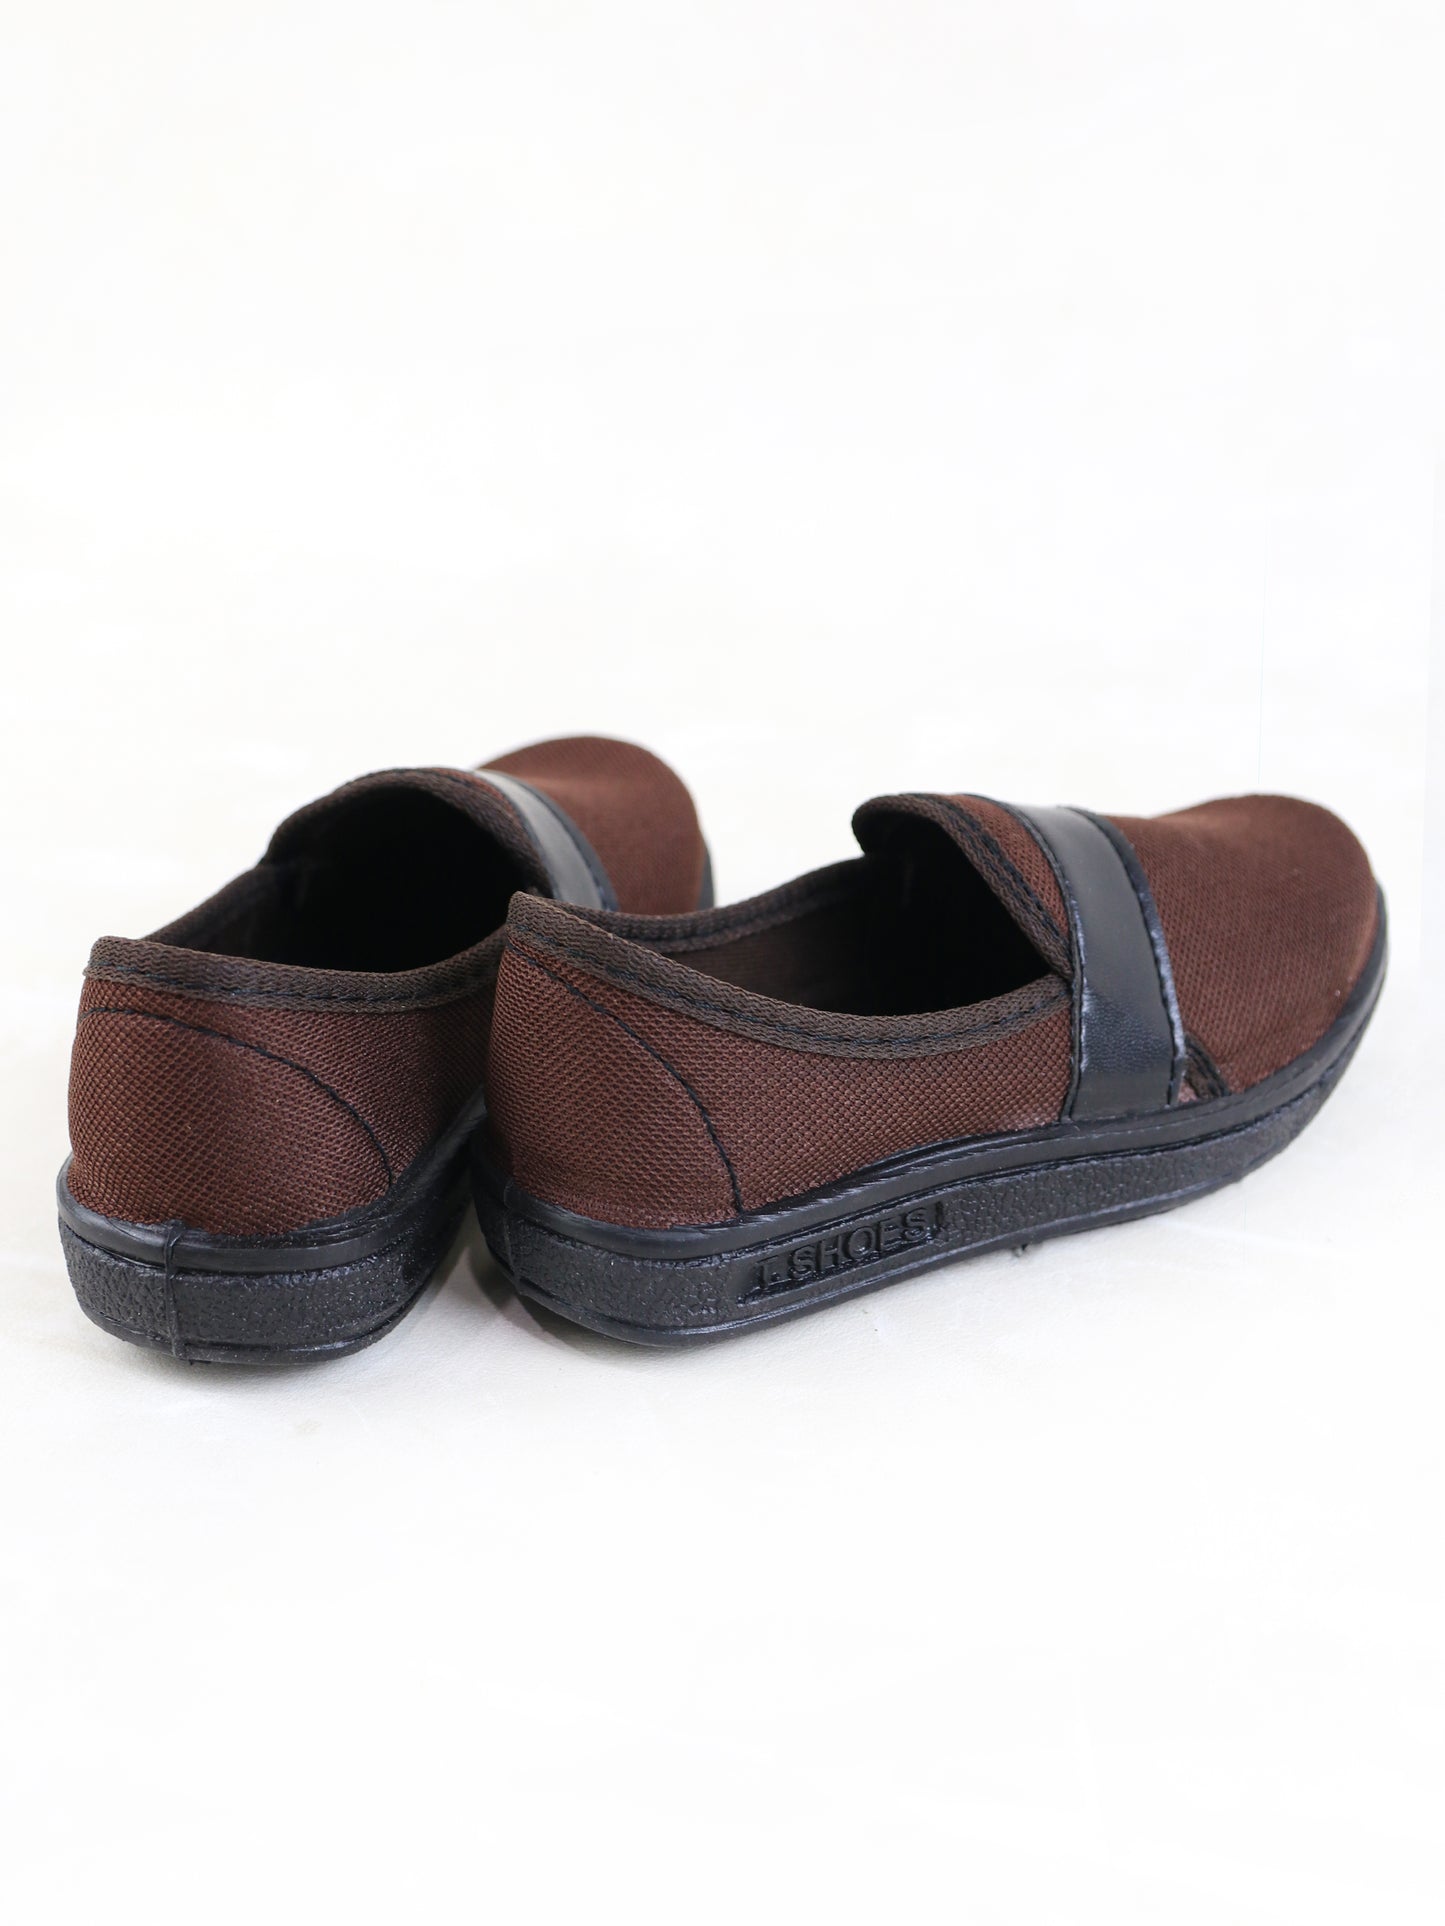 BS57 Boys Slip-On Shoes 13Yrs - 17Yrs Brown